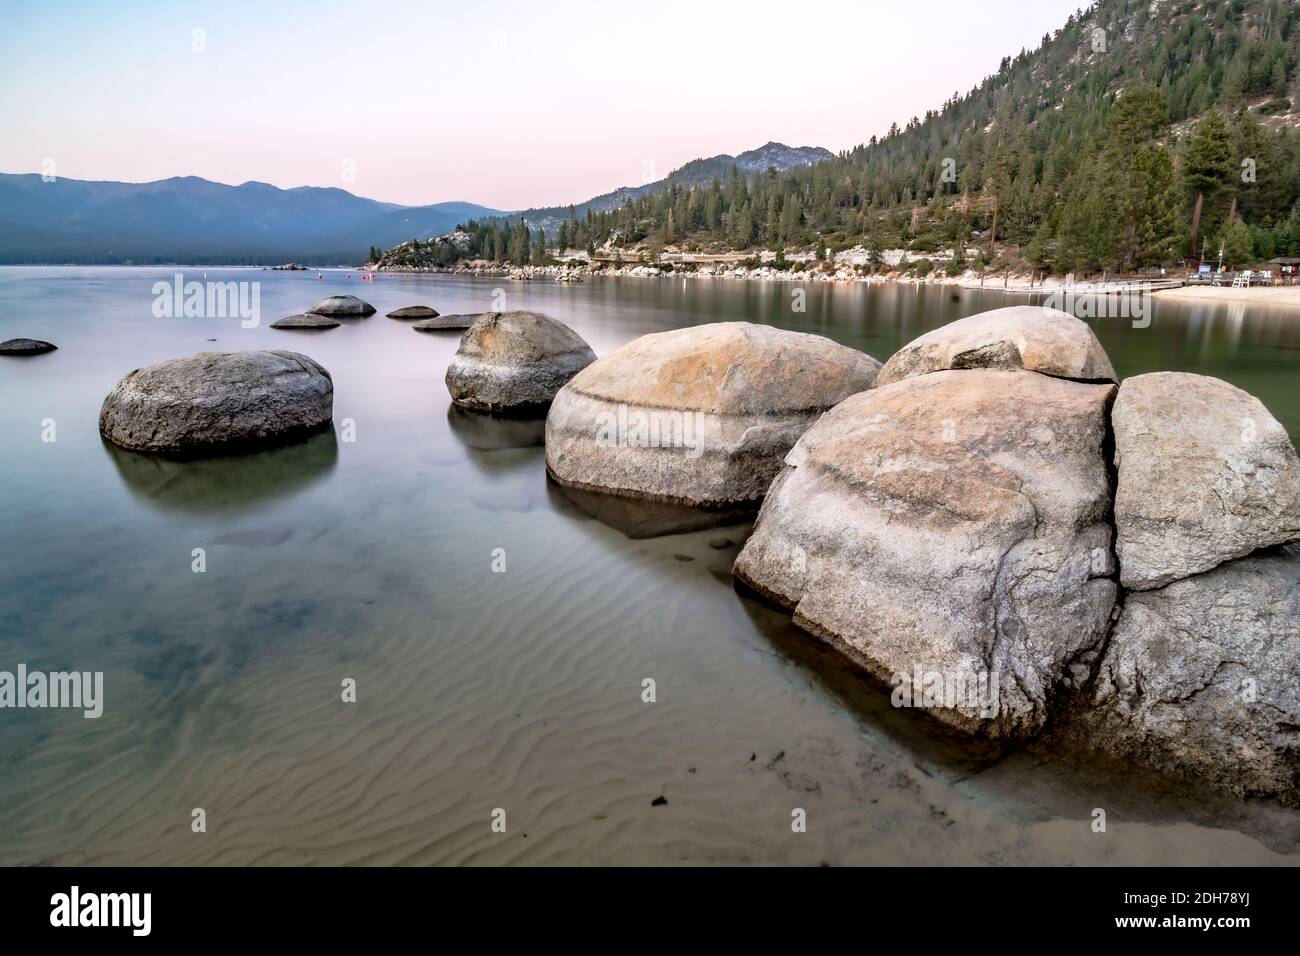 Beautiful sierra scenery at lake tahoe california Stock Photo